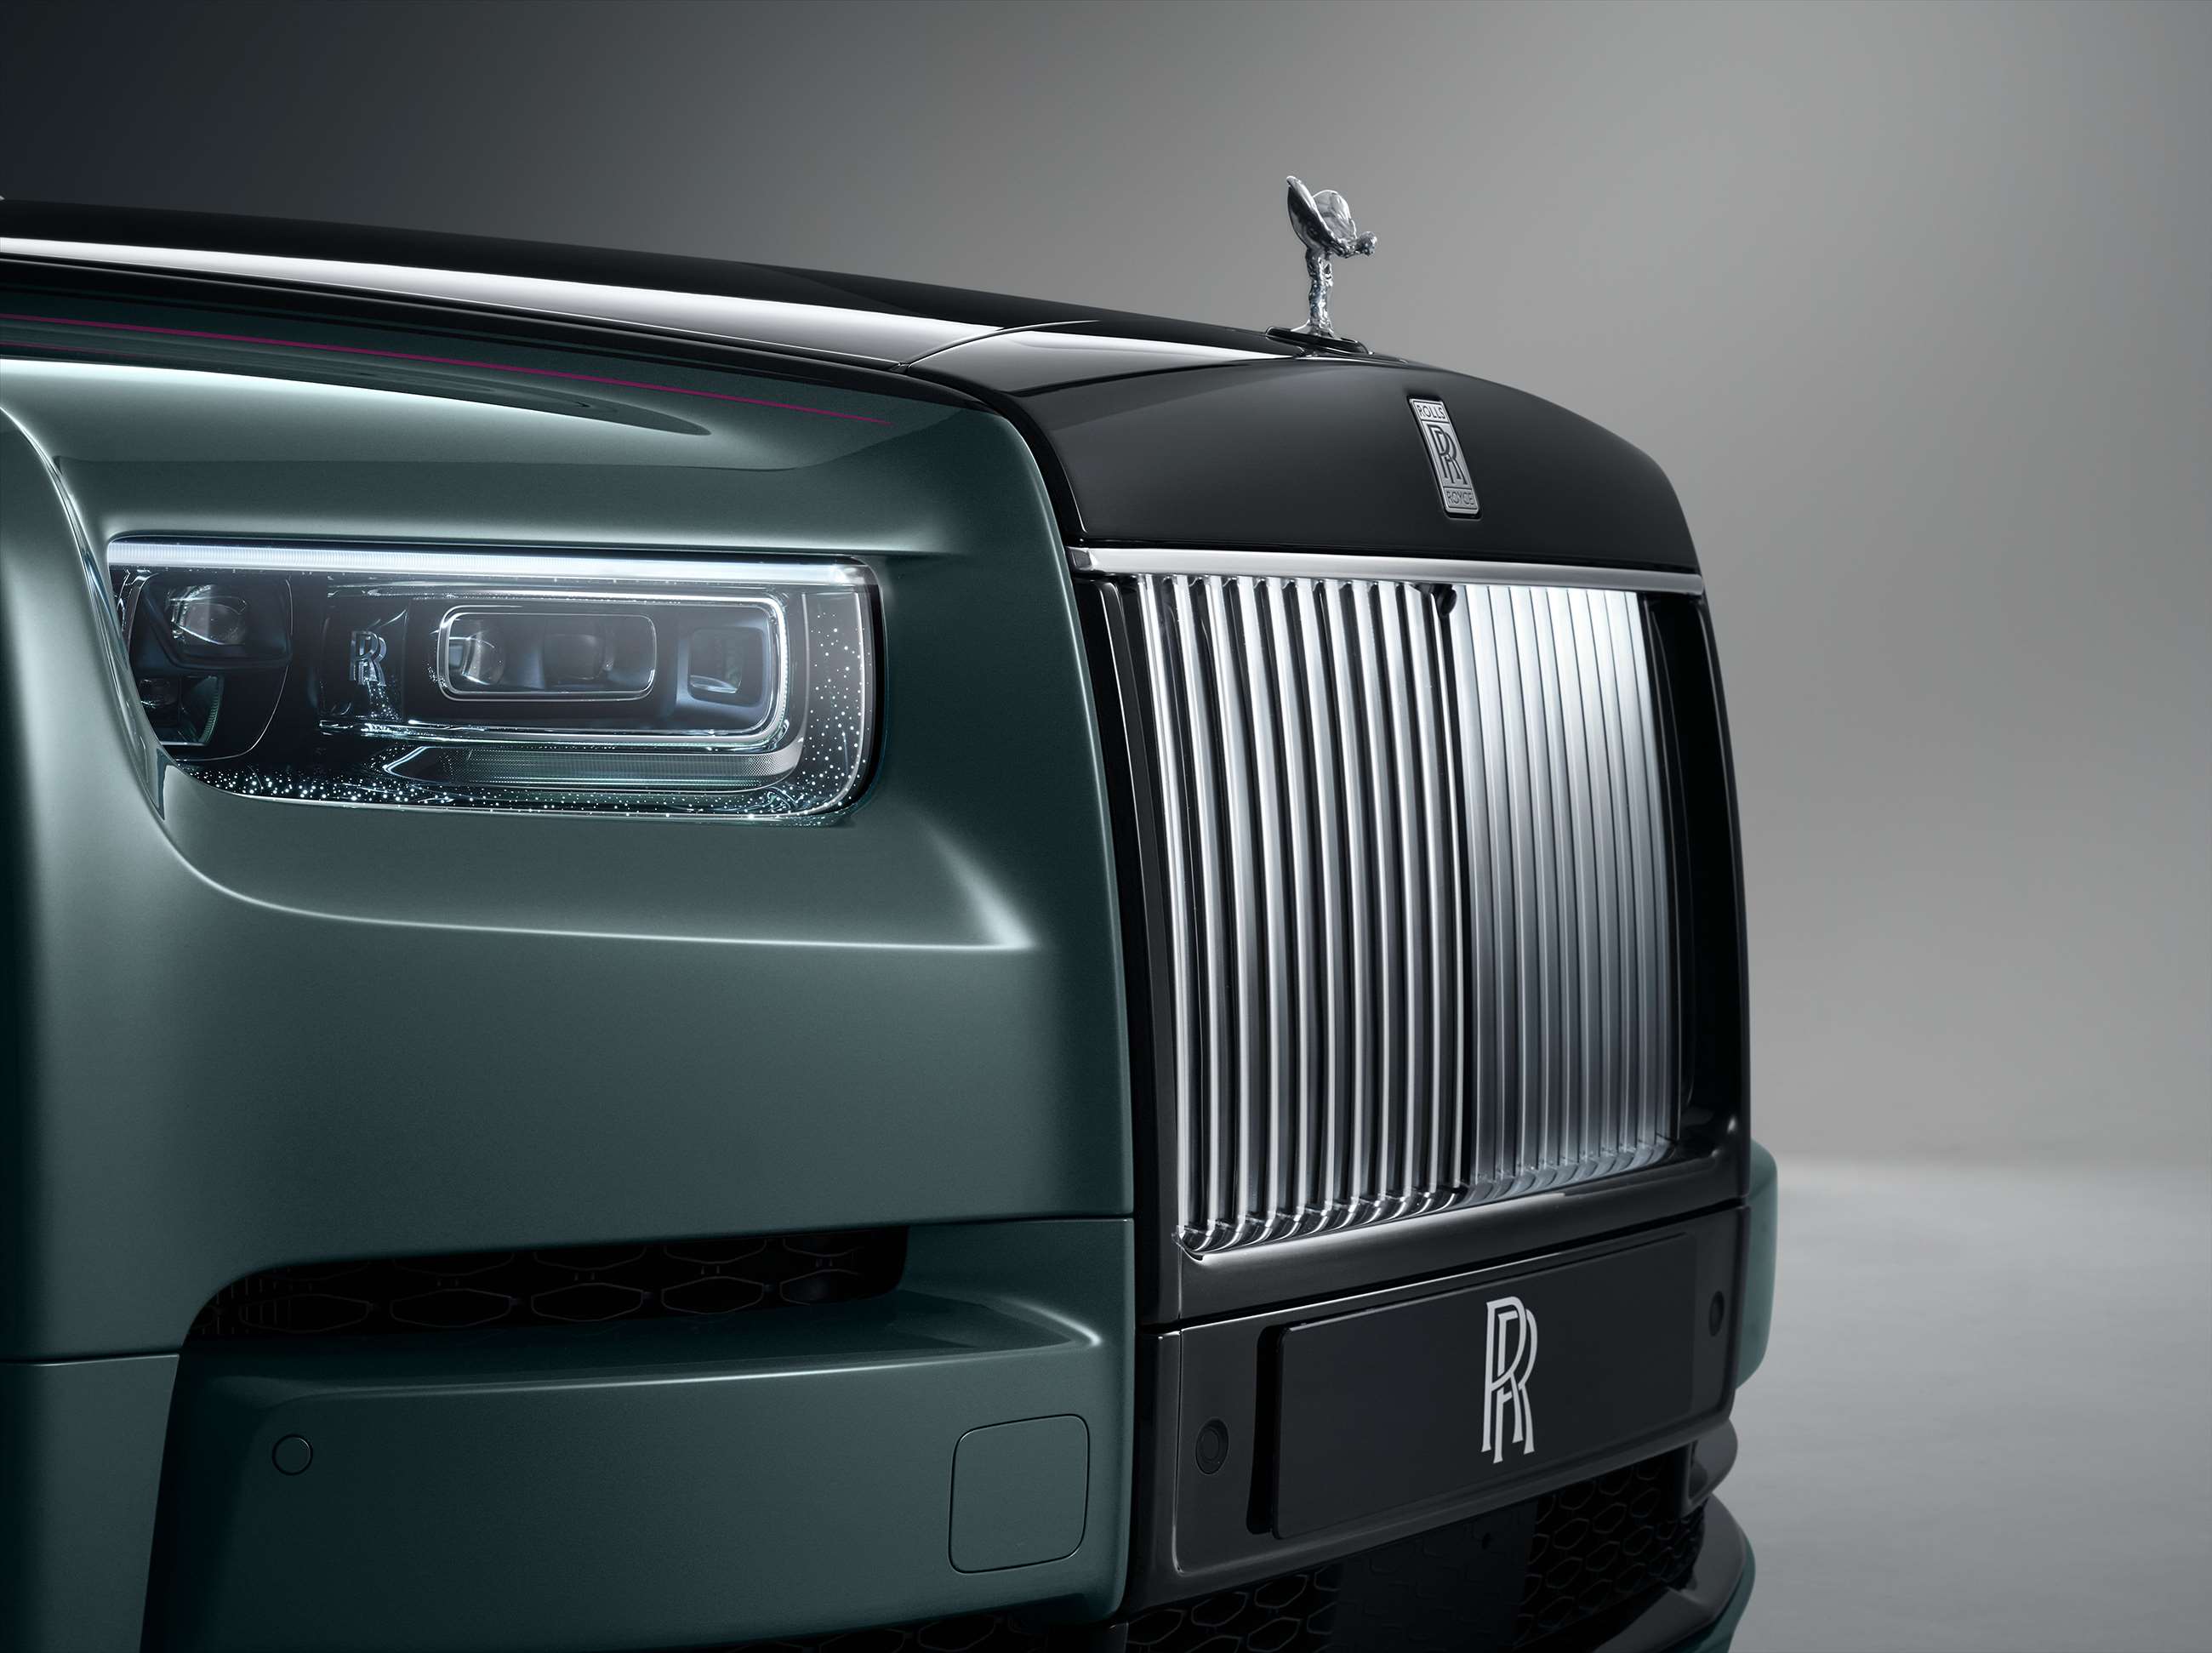 Revheads  Rolls Royce Inspired Star Roof Lighting done in  Facebook